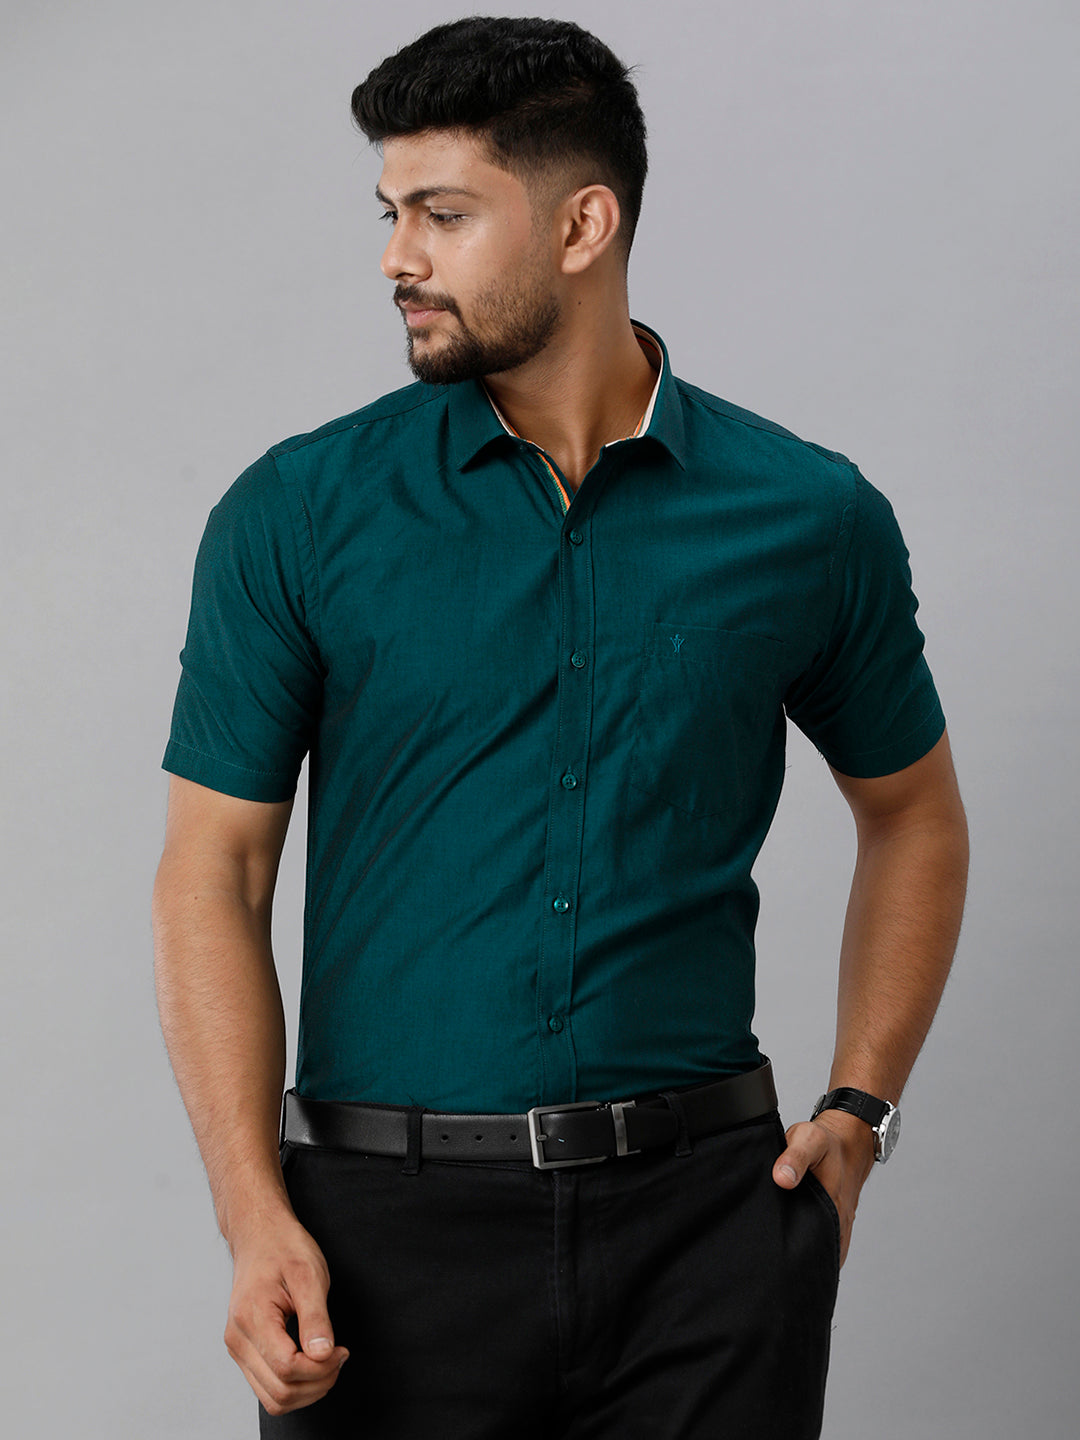 Mens Premium Cotton Formal Shirt Half Sleeves Dark Green MH G116